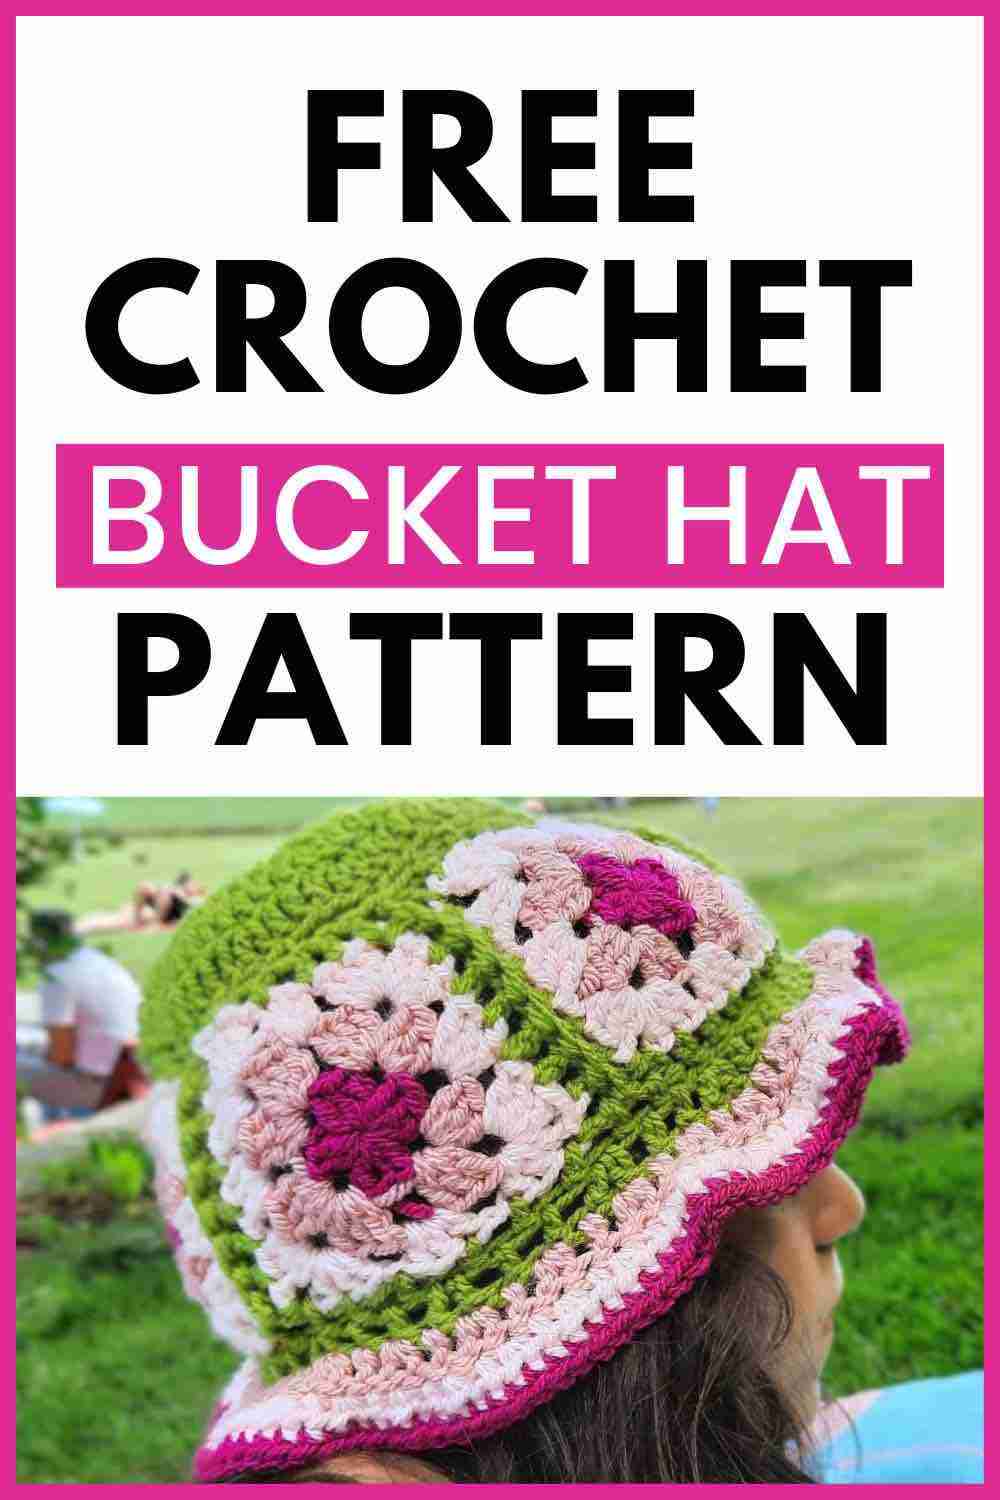 Crochet Granny Square Bucket Hat Pattern Free